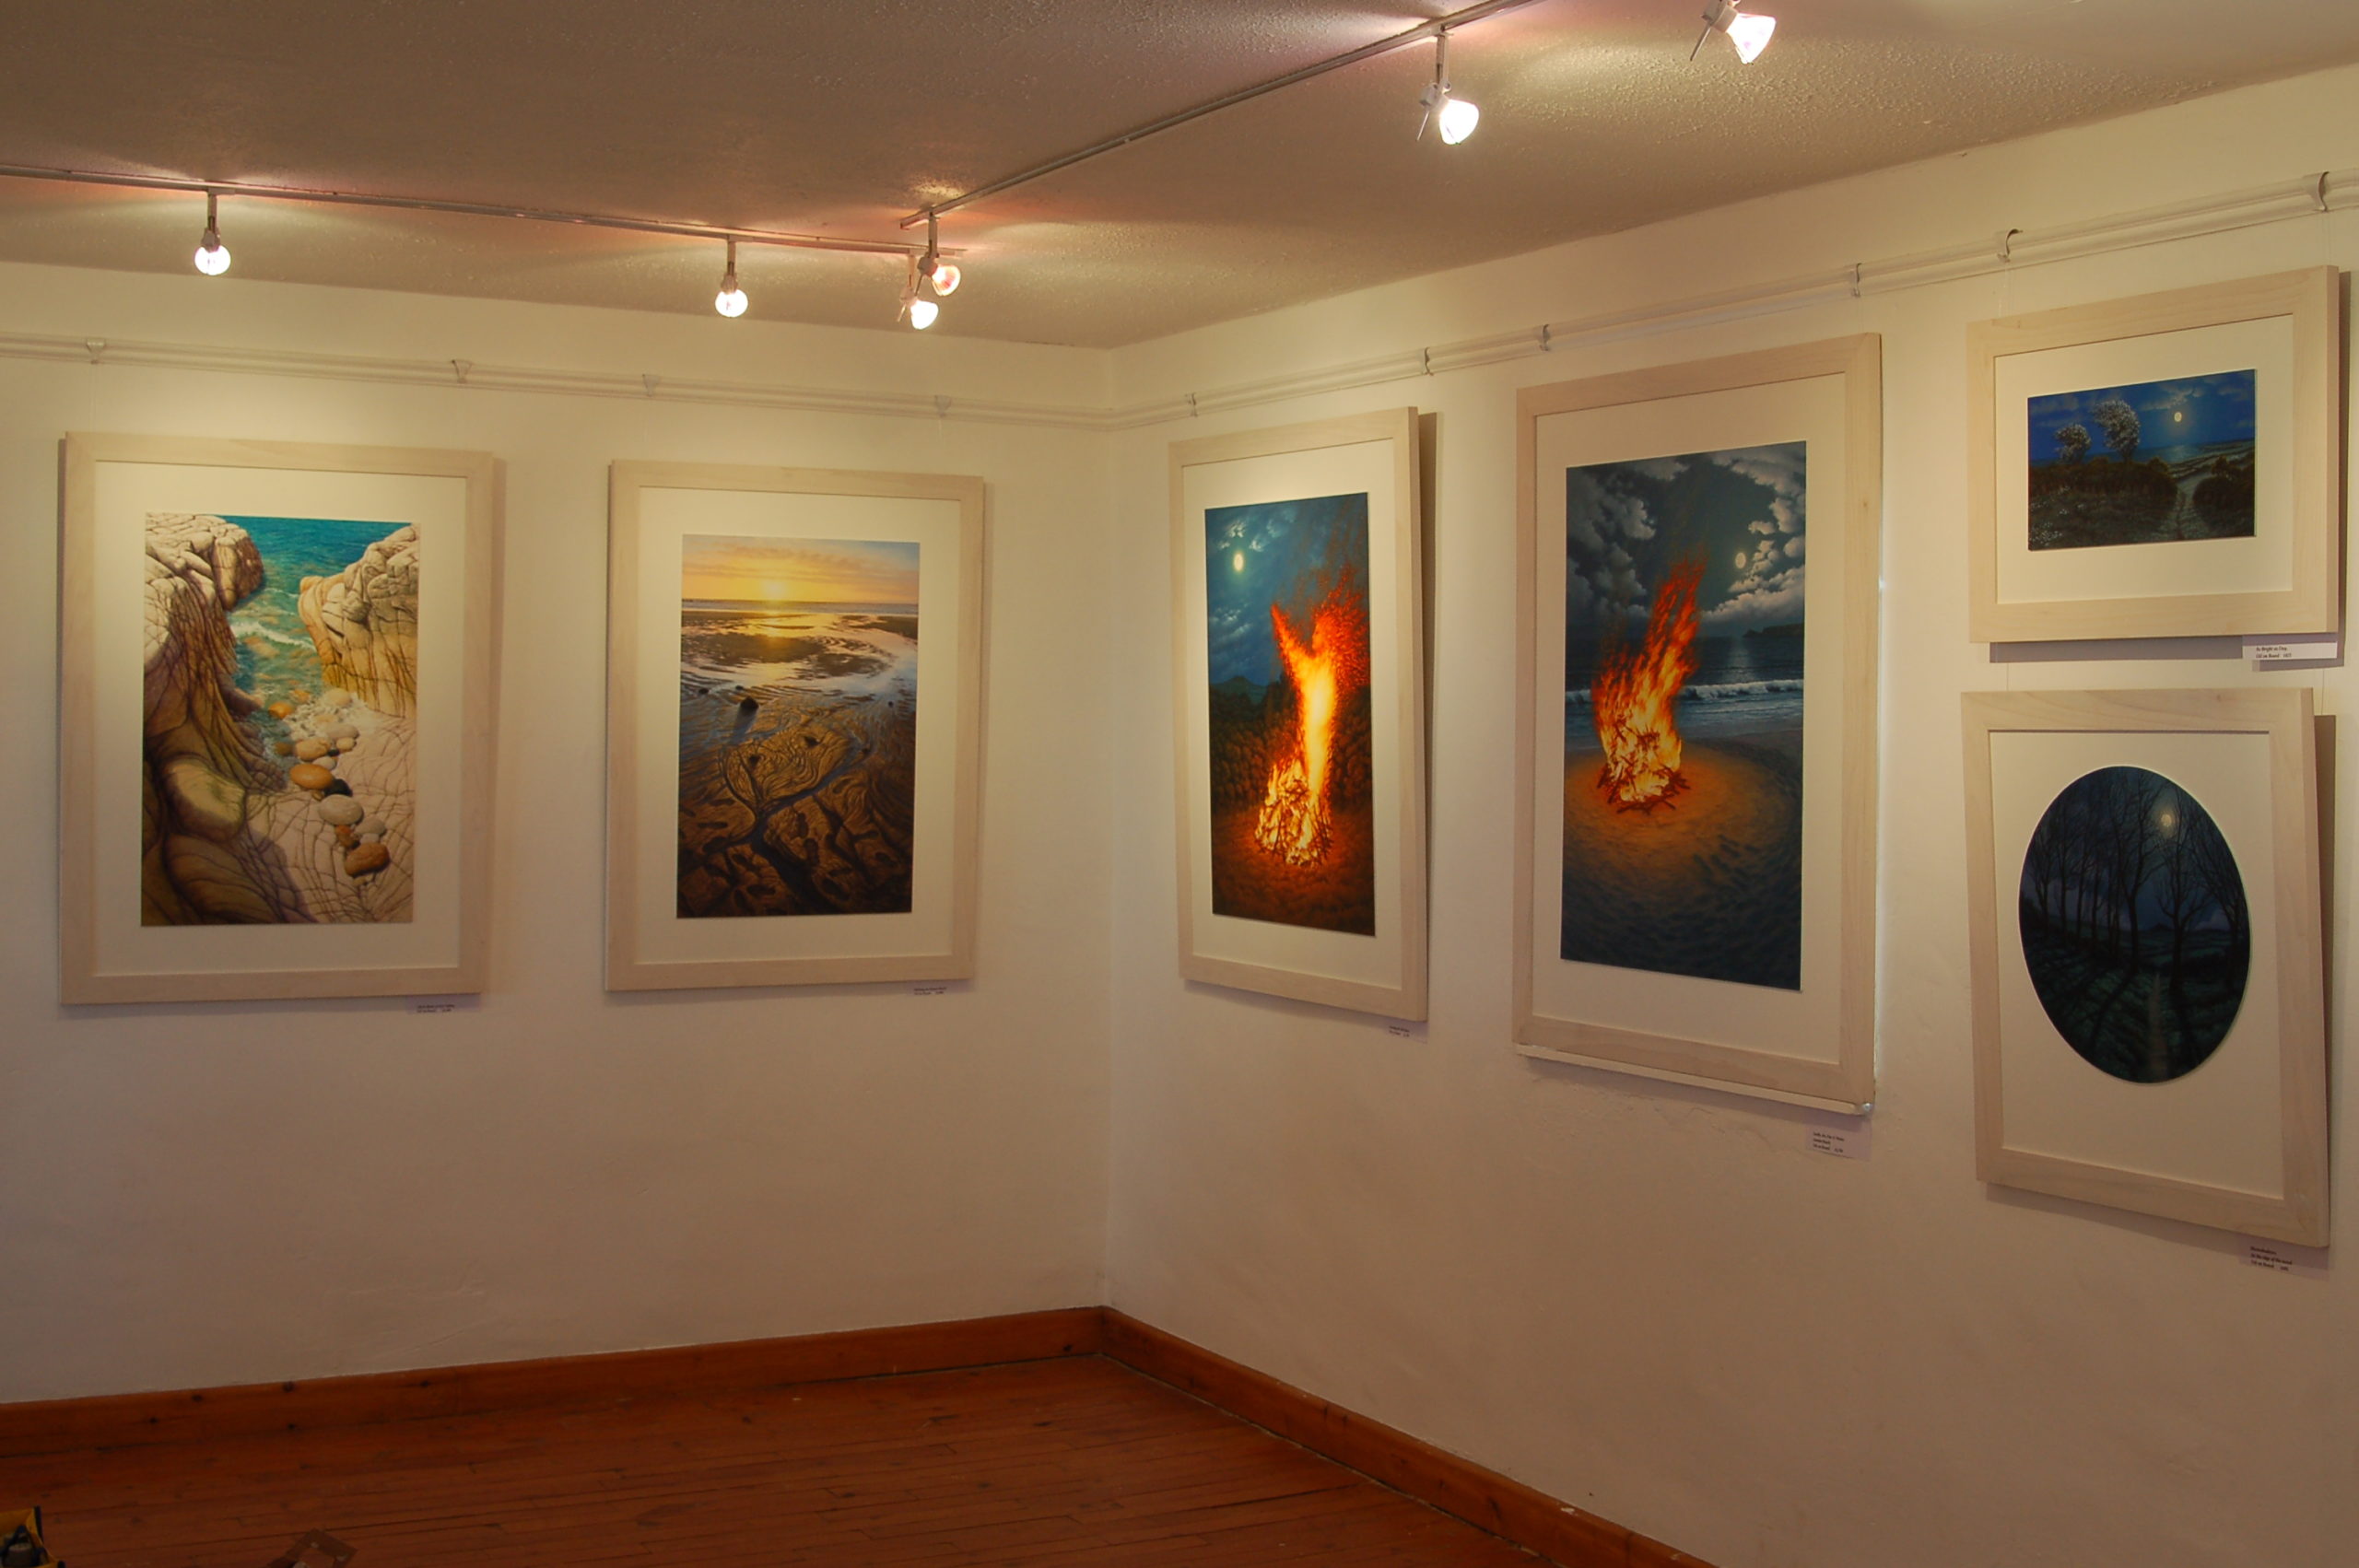 Exhibition of Cornish Artist Sarah Vivian's Paintings